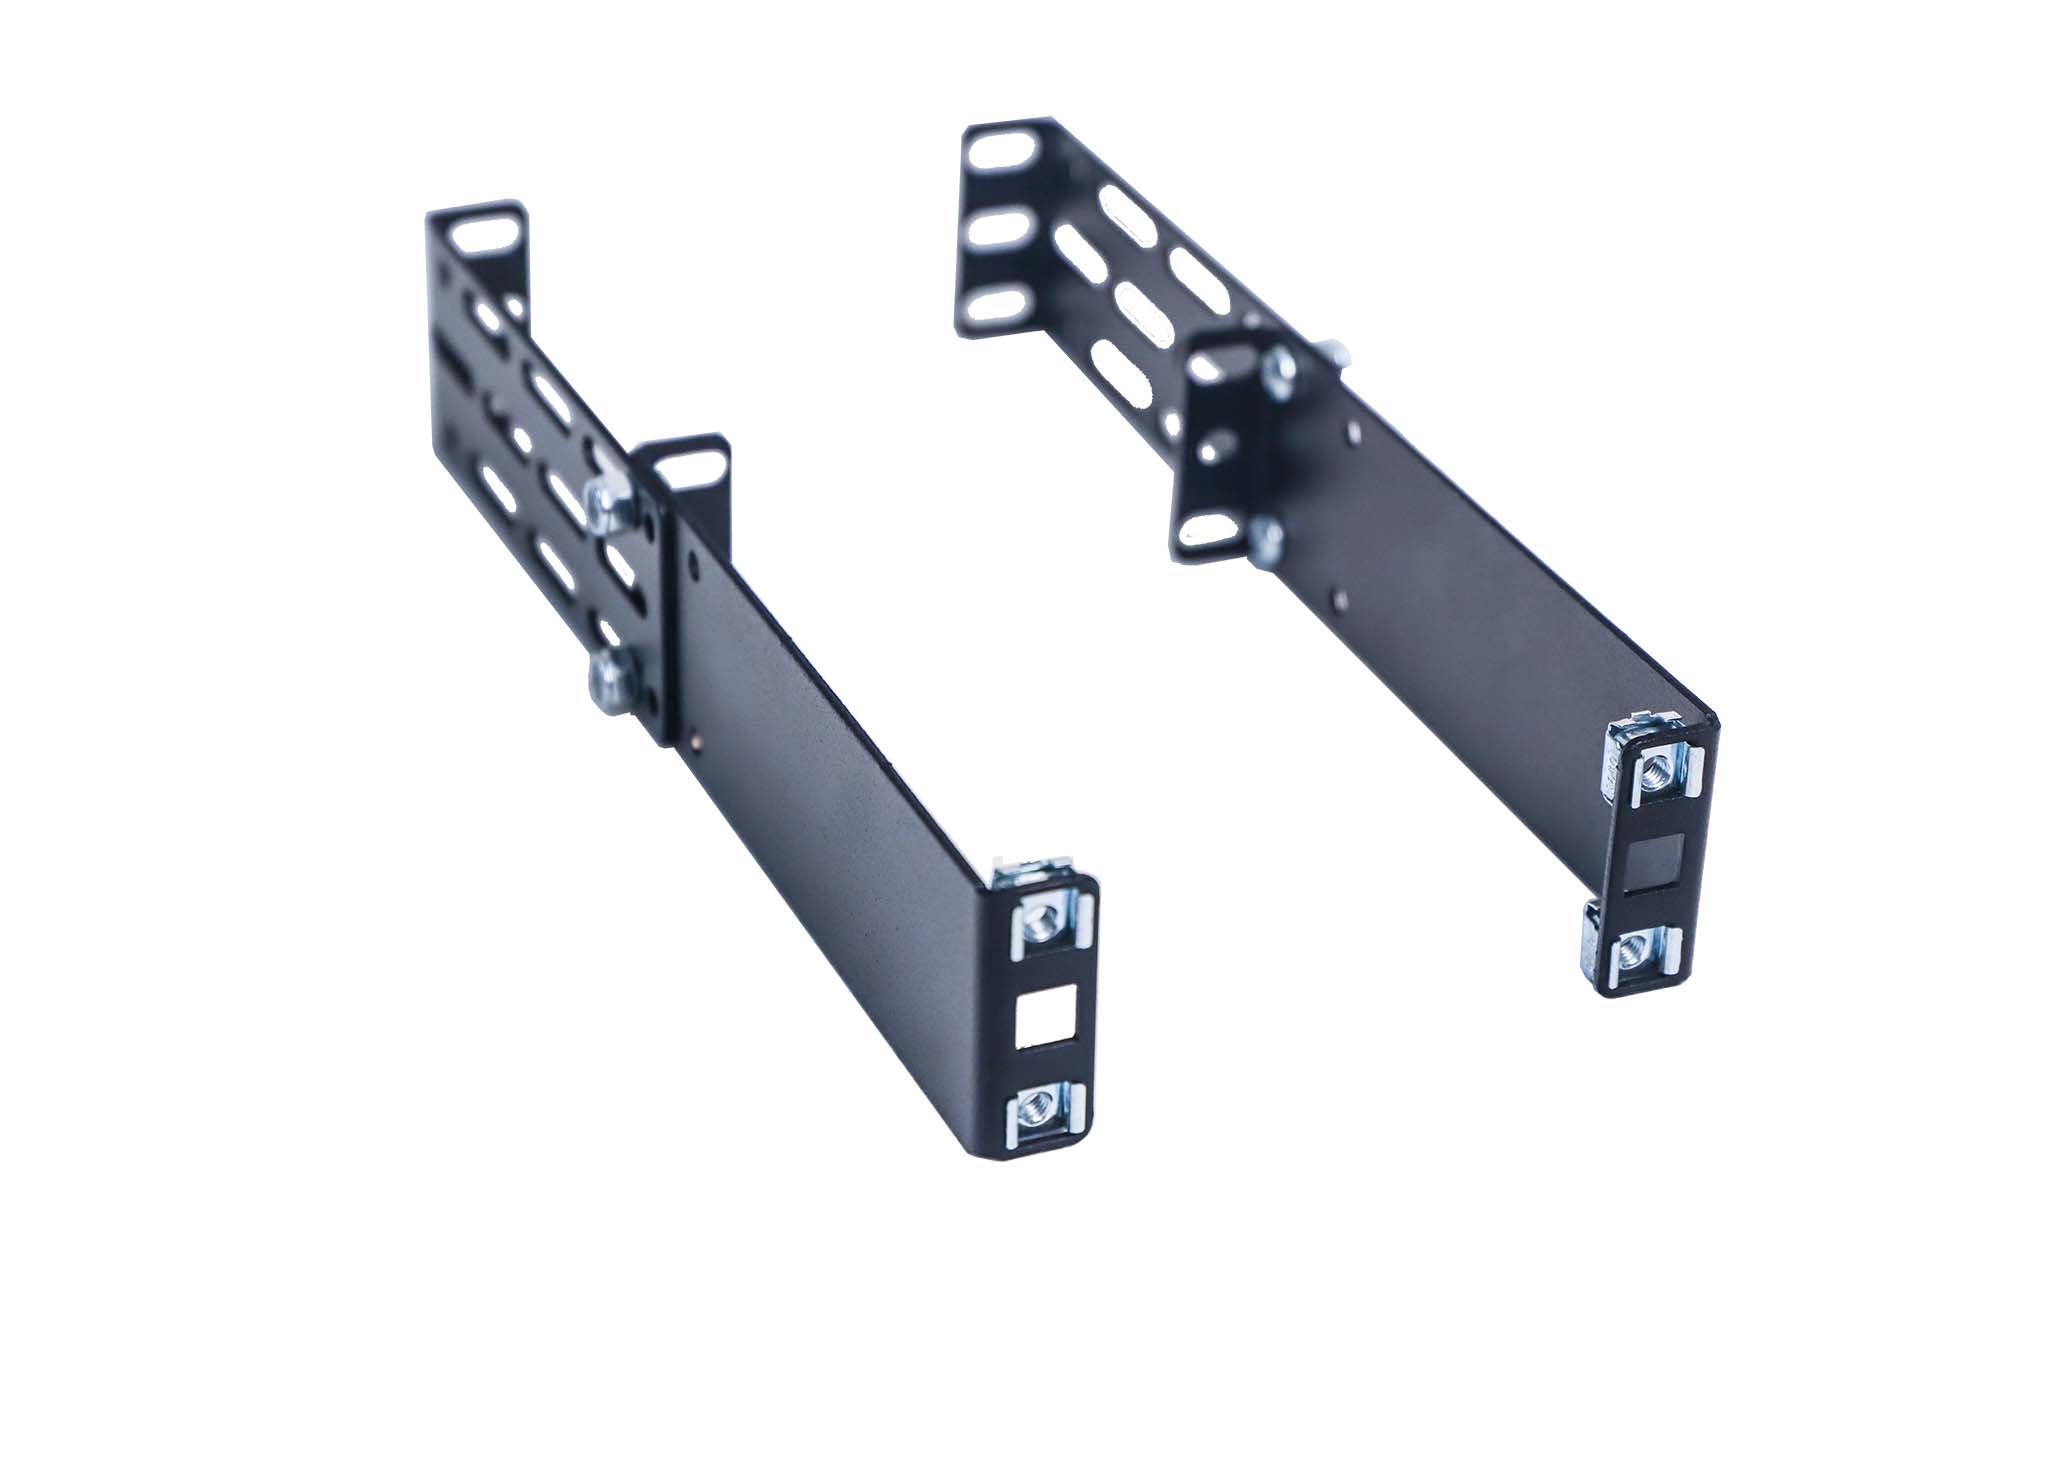 IAENCLOSURES 110V10-2U 10 inch depth adjustable rack extender brackets for EIA standard 19 inch, 23 inch and 24 inch wide rack cabinet